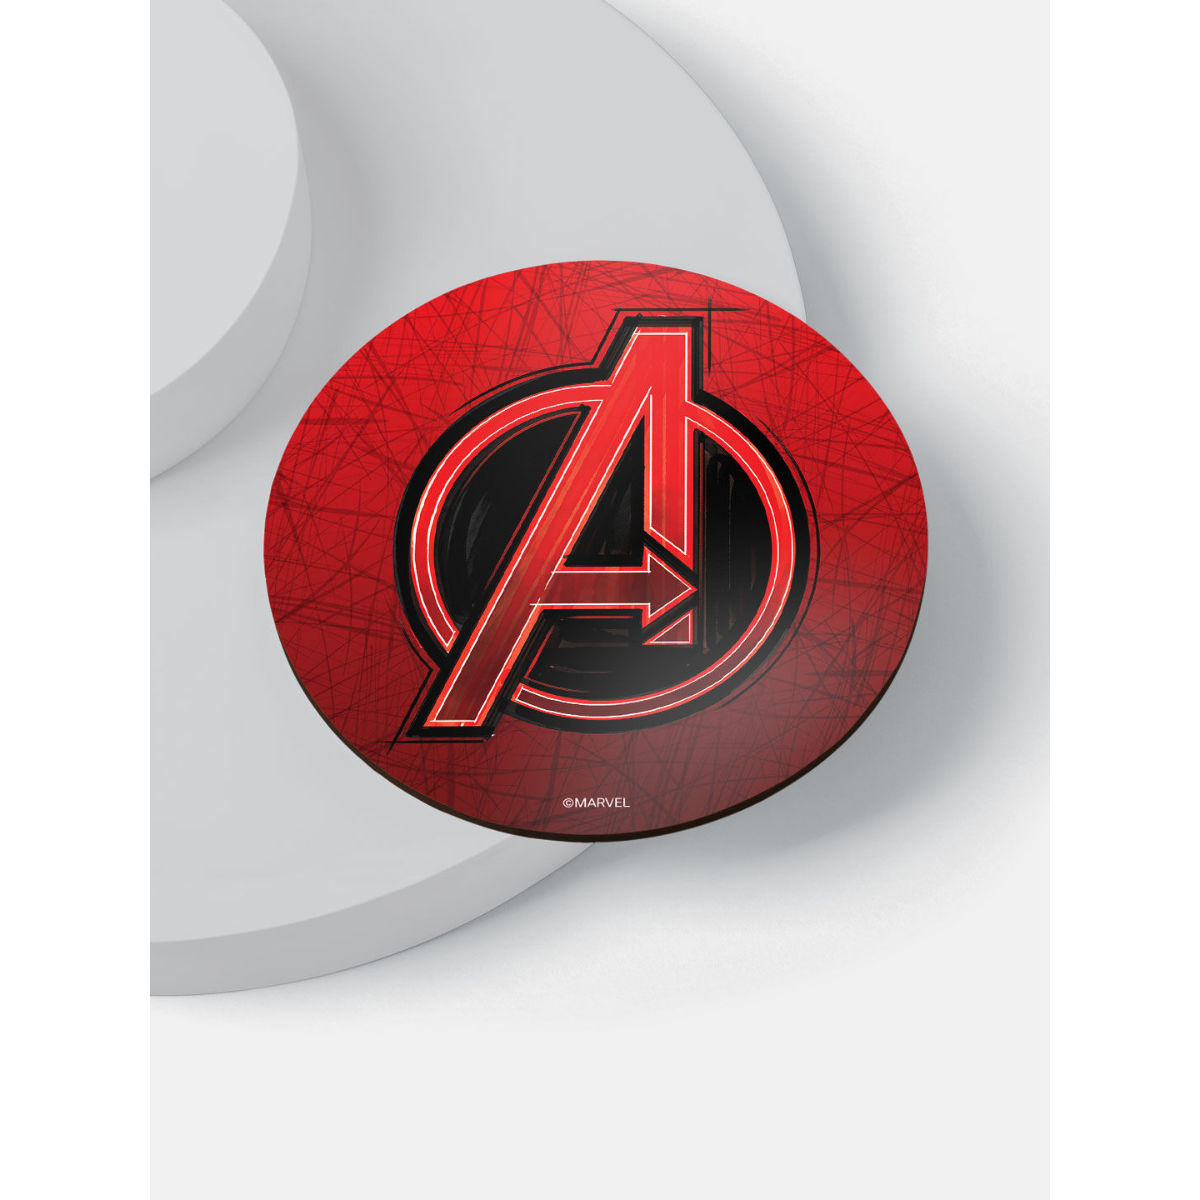 Marvel Avengers symbol | Avengers symbols, Sketch book, Volkswagen logo